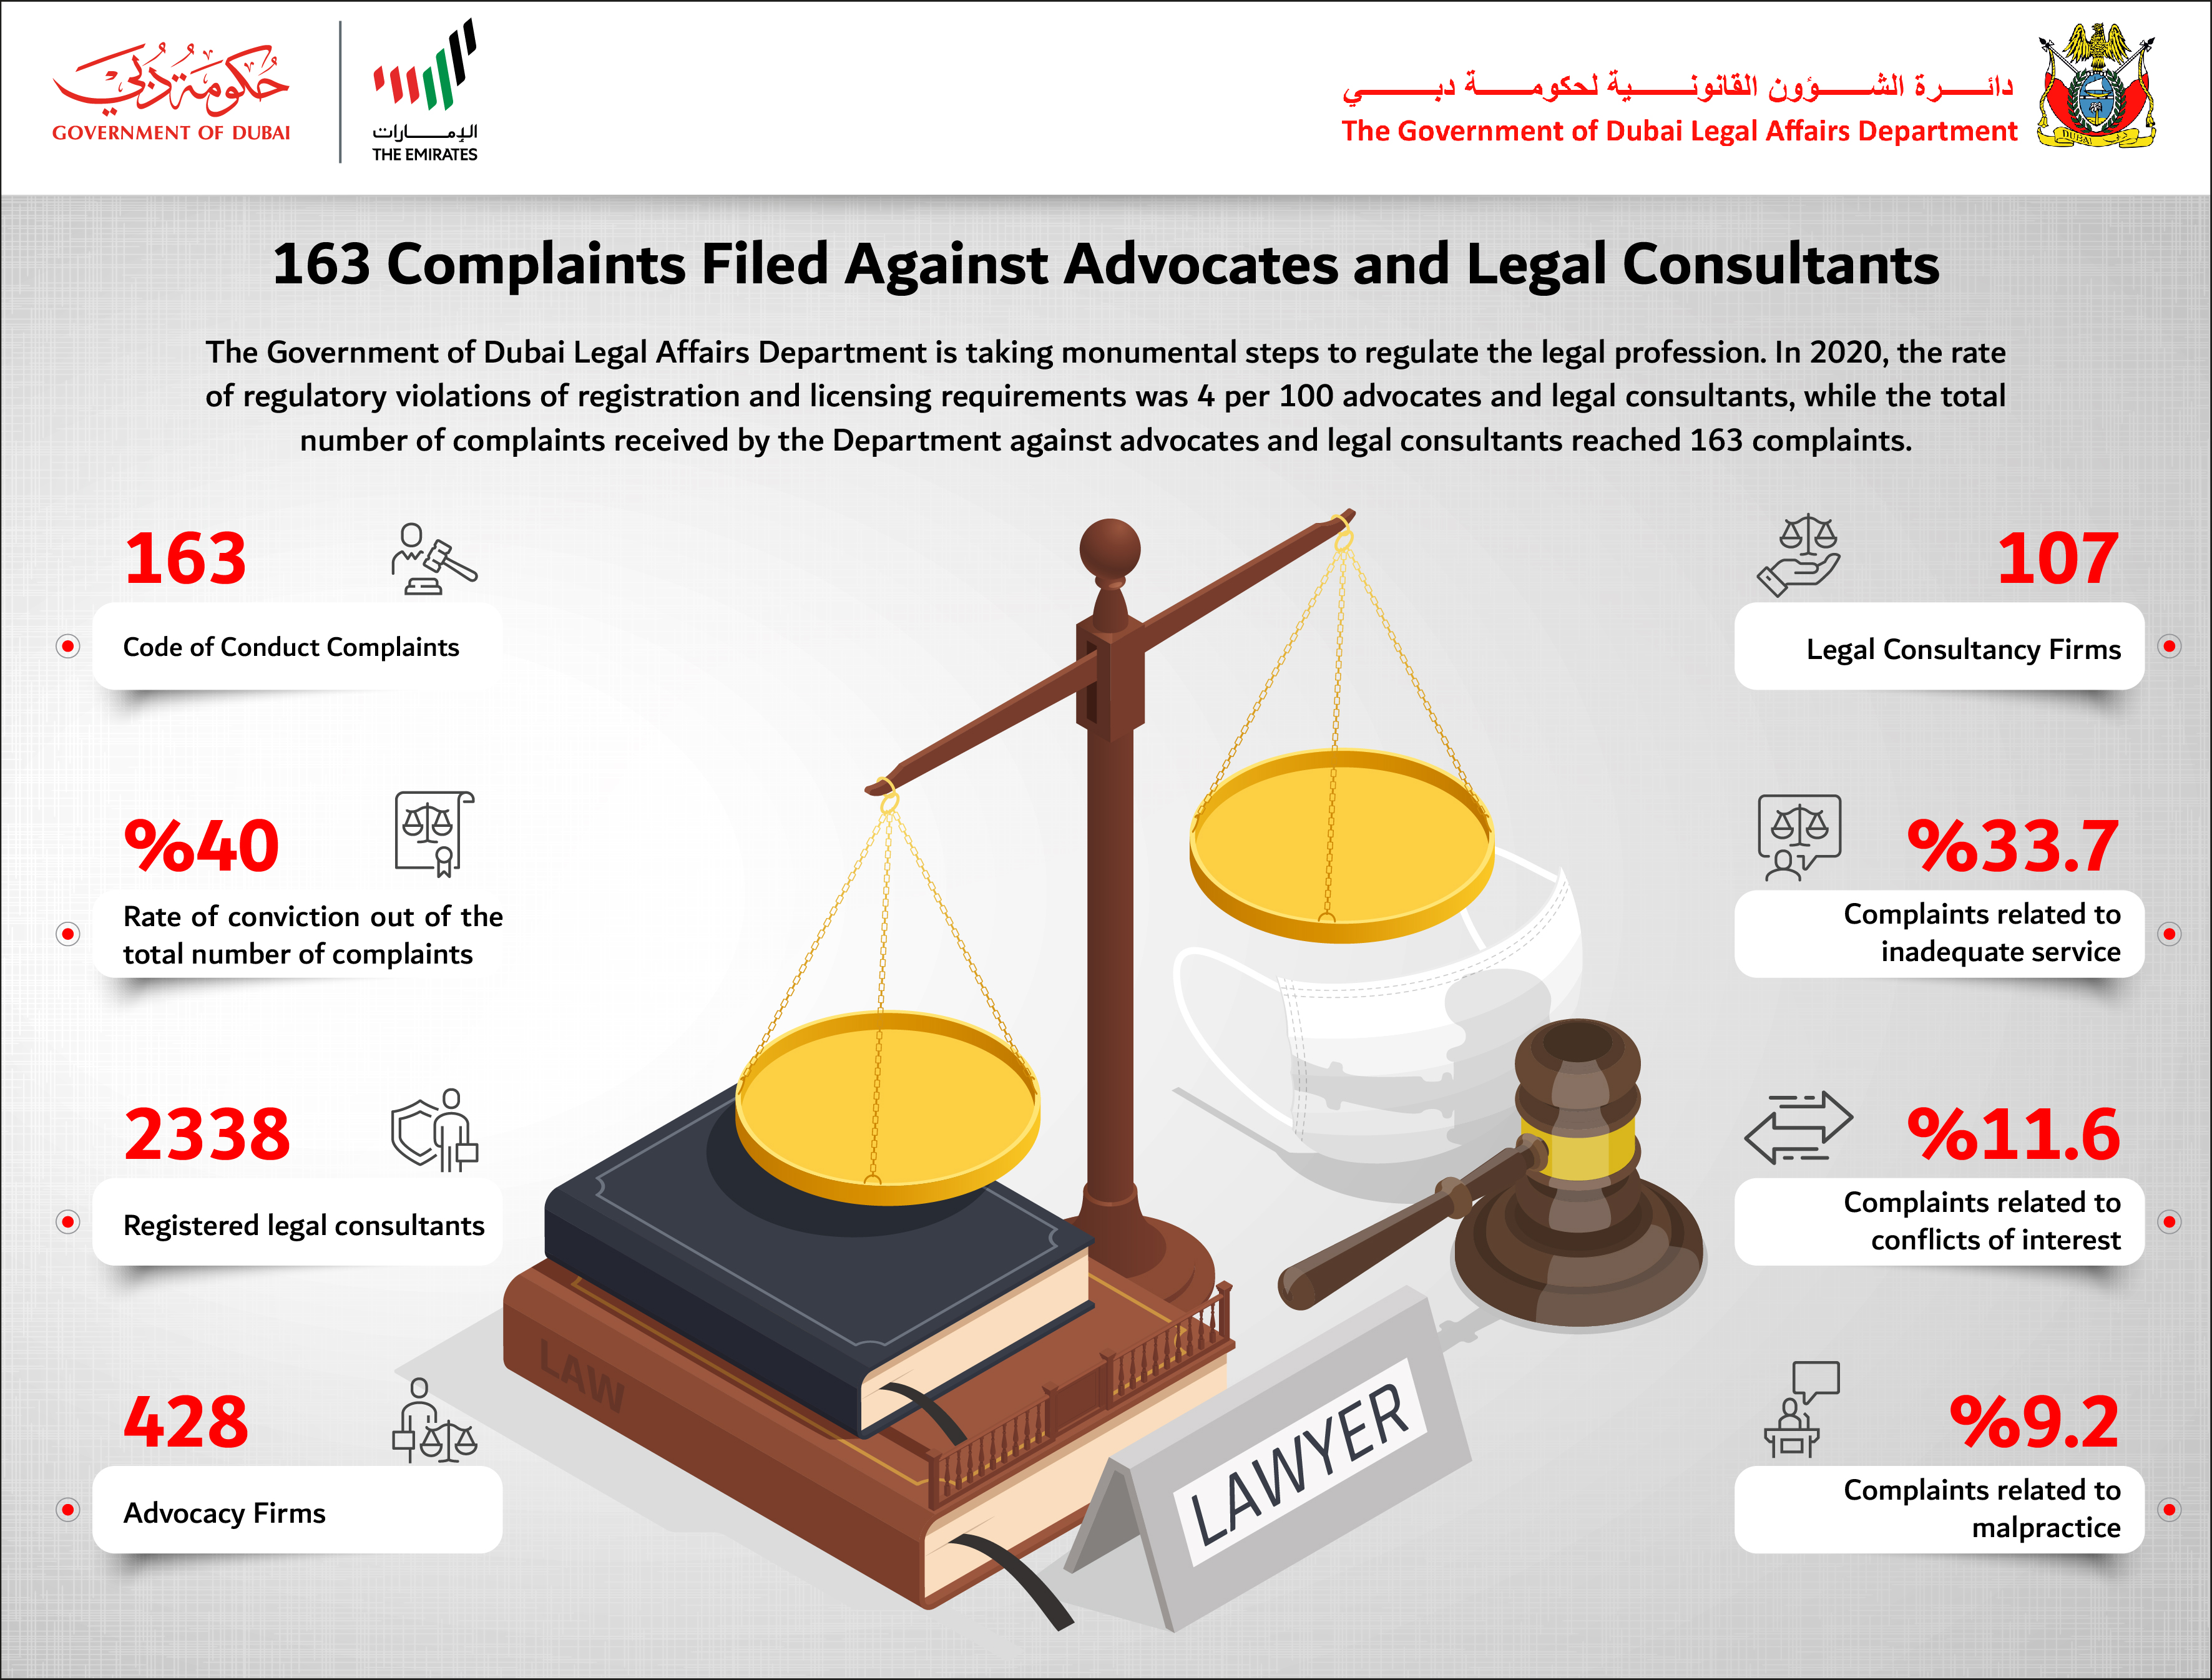 1234 Advocates Registered with the "Dubai Legal", 24% of whom are Emirati Women